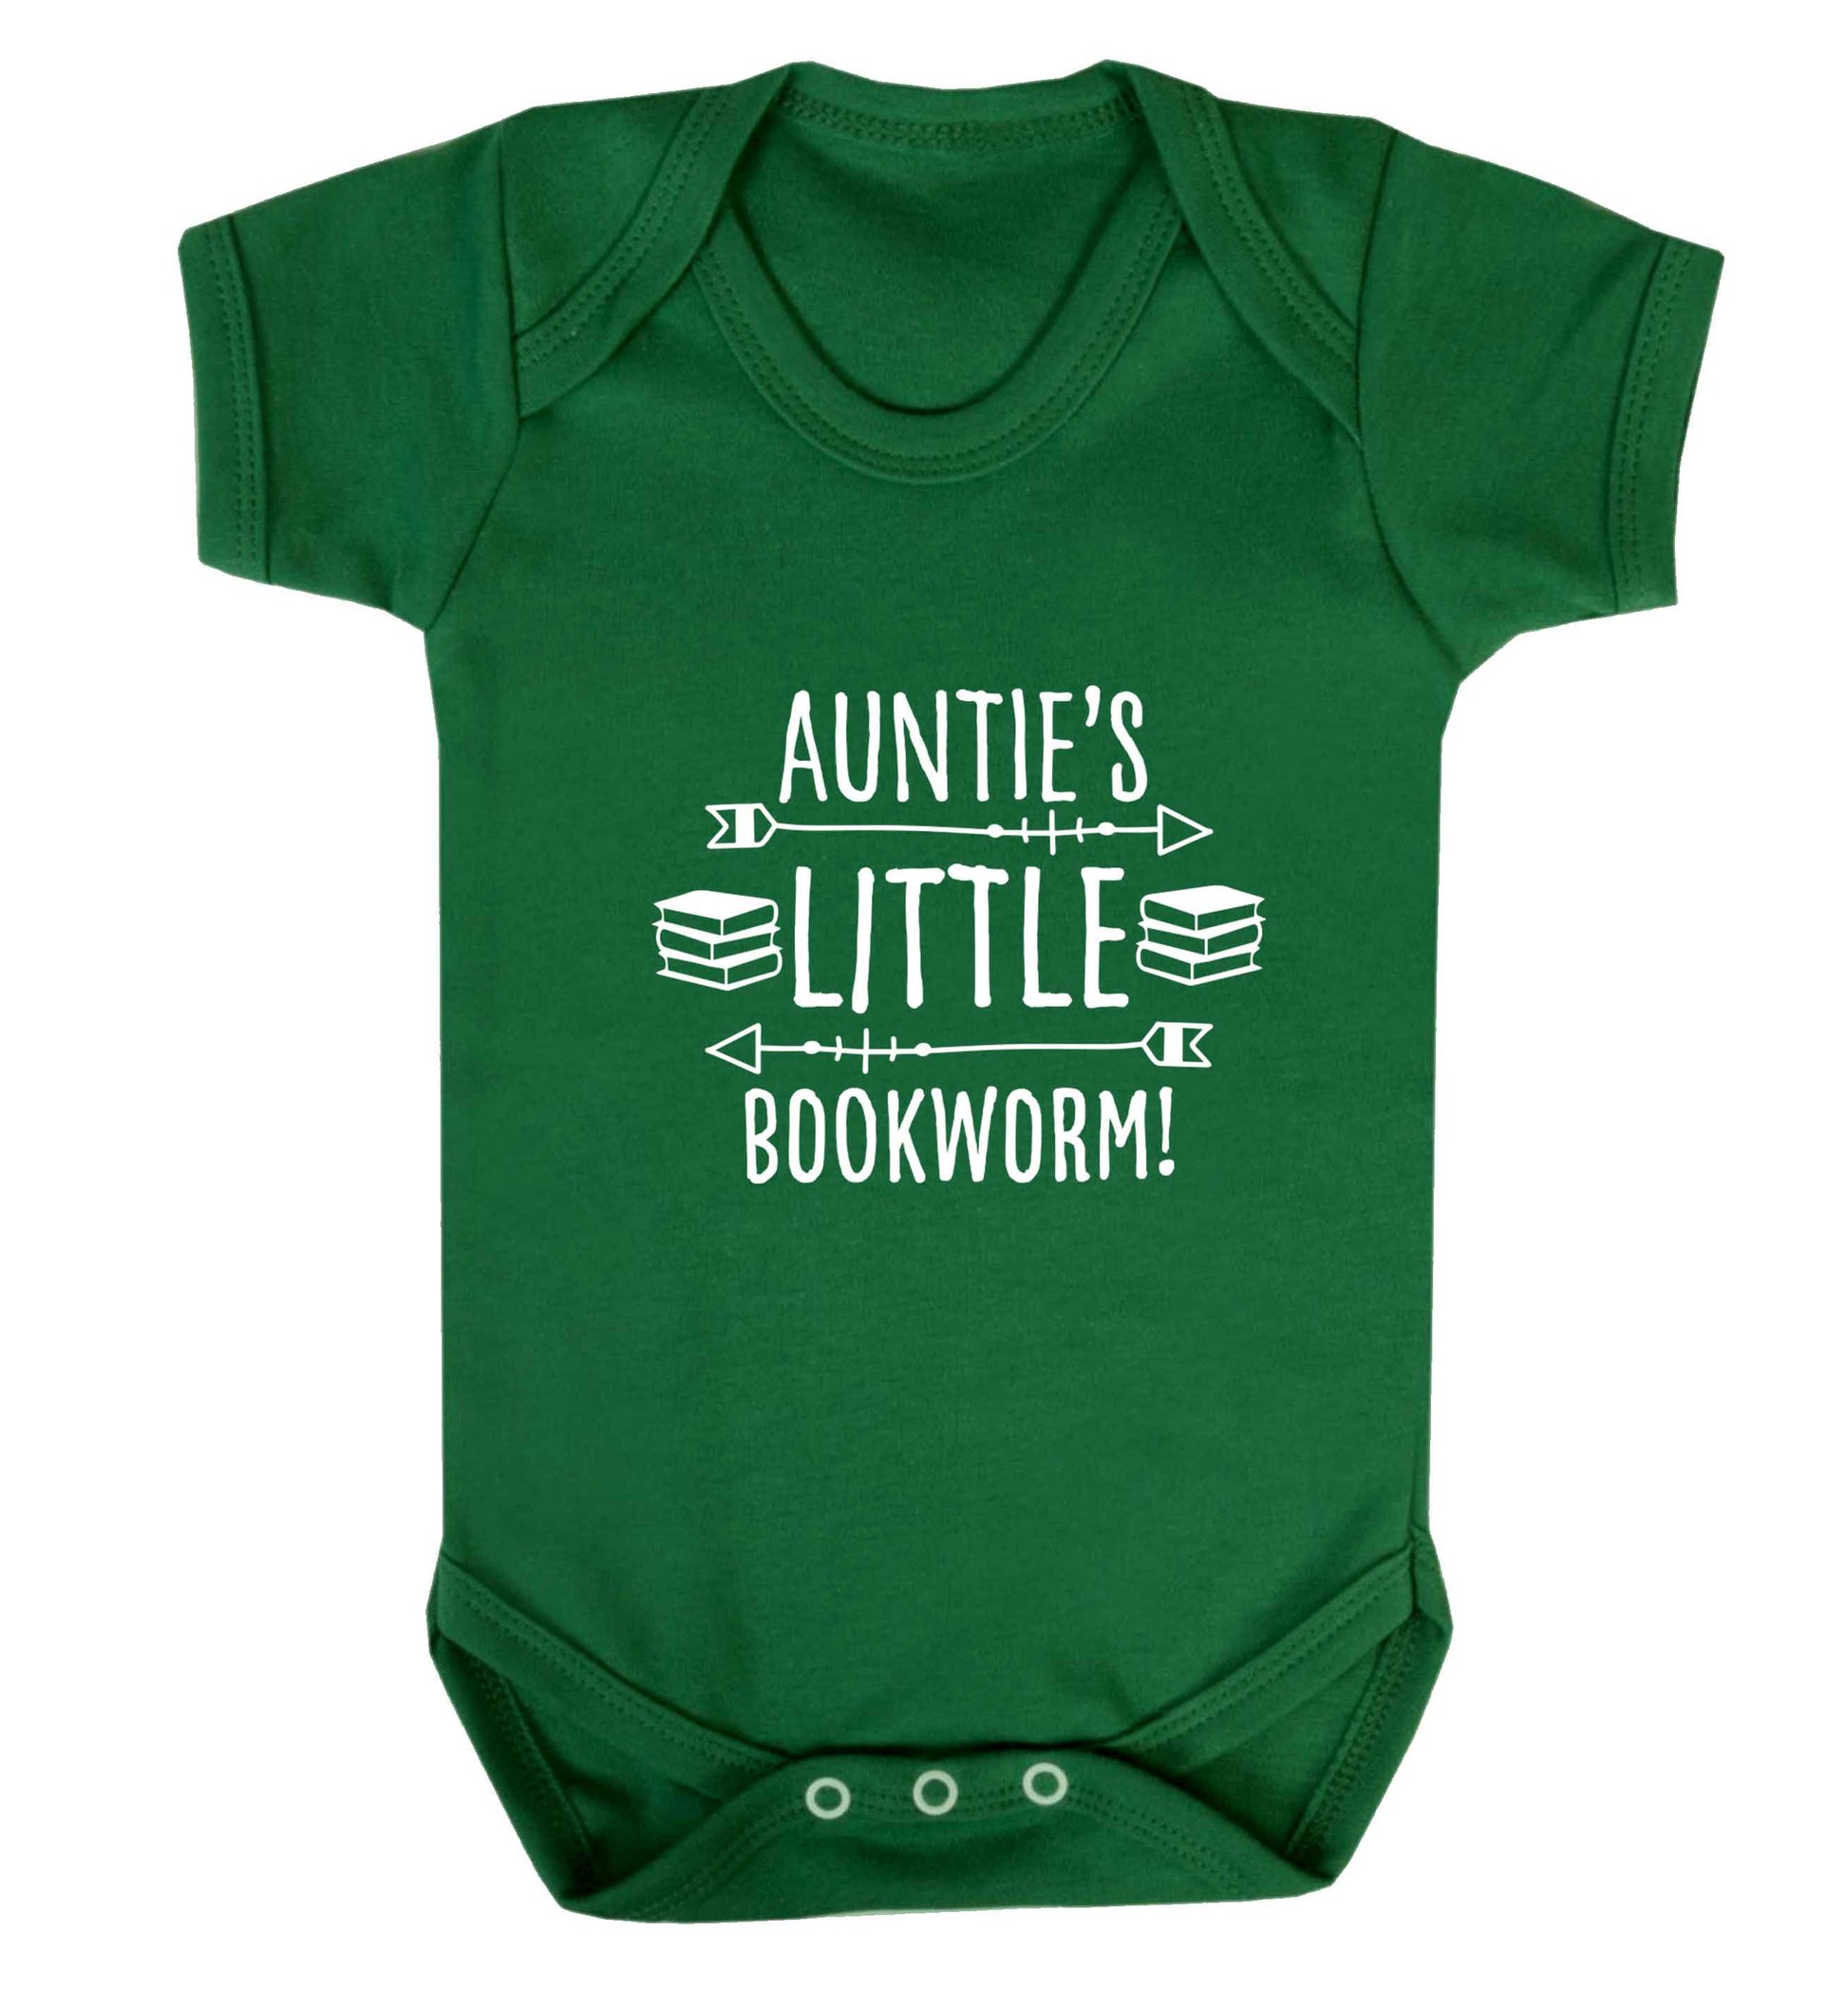 Auntie's little bookworm baby vest green 18-24 months